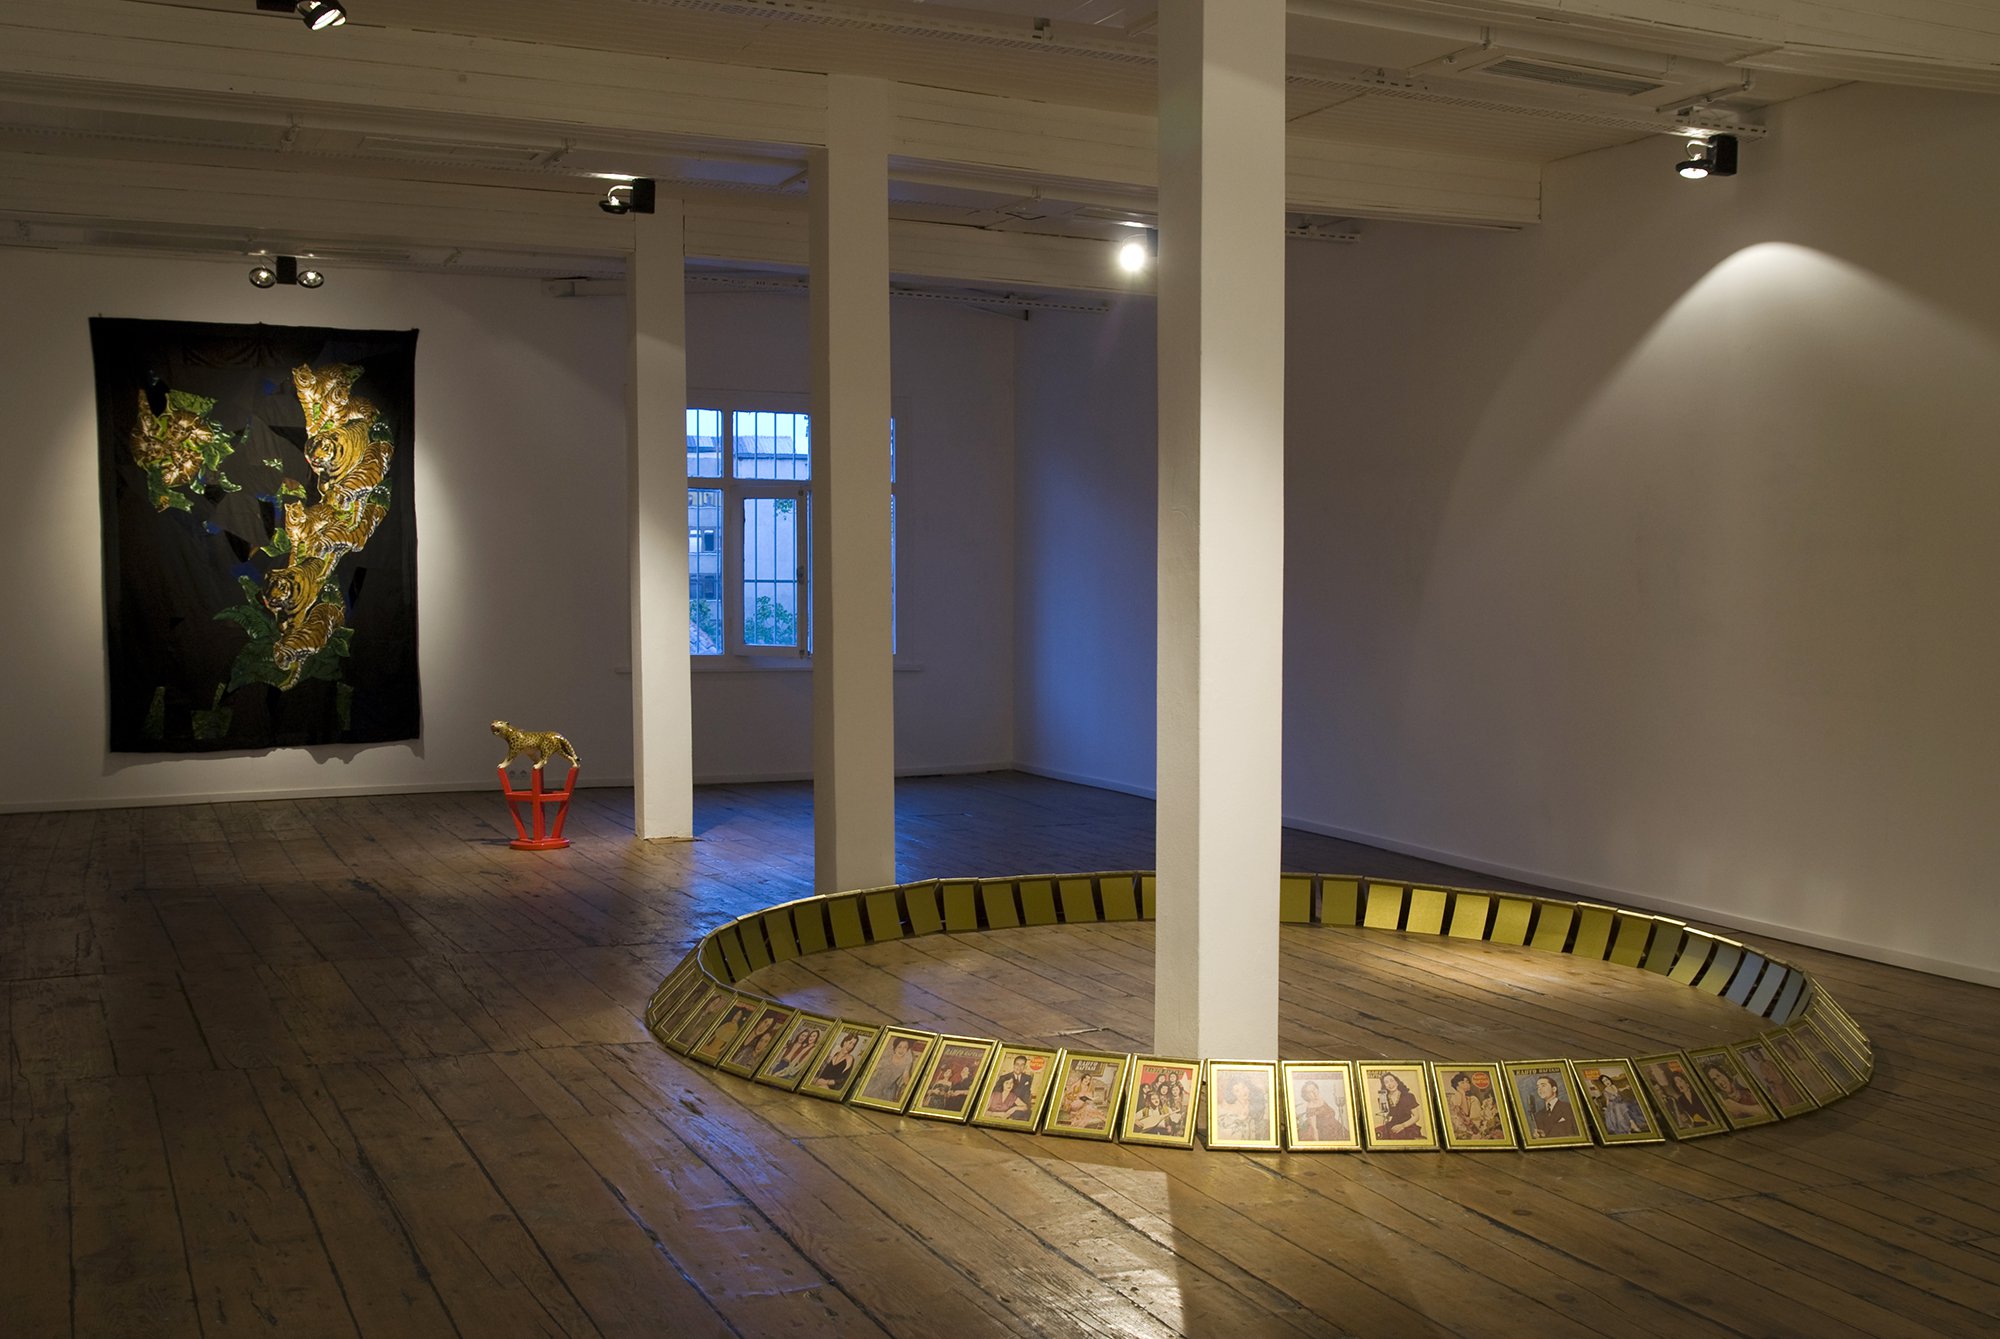 (On floor) Gülsün Karamustafa, Chronographia, 60 pieces of 21 x 30 cm (8 1/4 x 11 3/4 in) coloured prints, diameter 3.05 m (120 1/8 in). Installation view, Opening, Rodeo, Istanbul, 2009